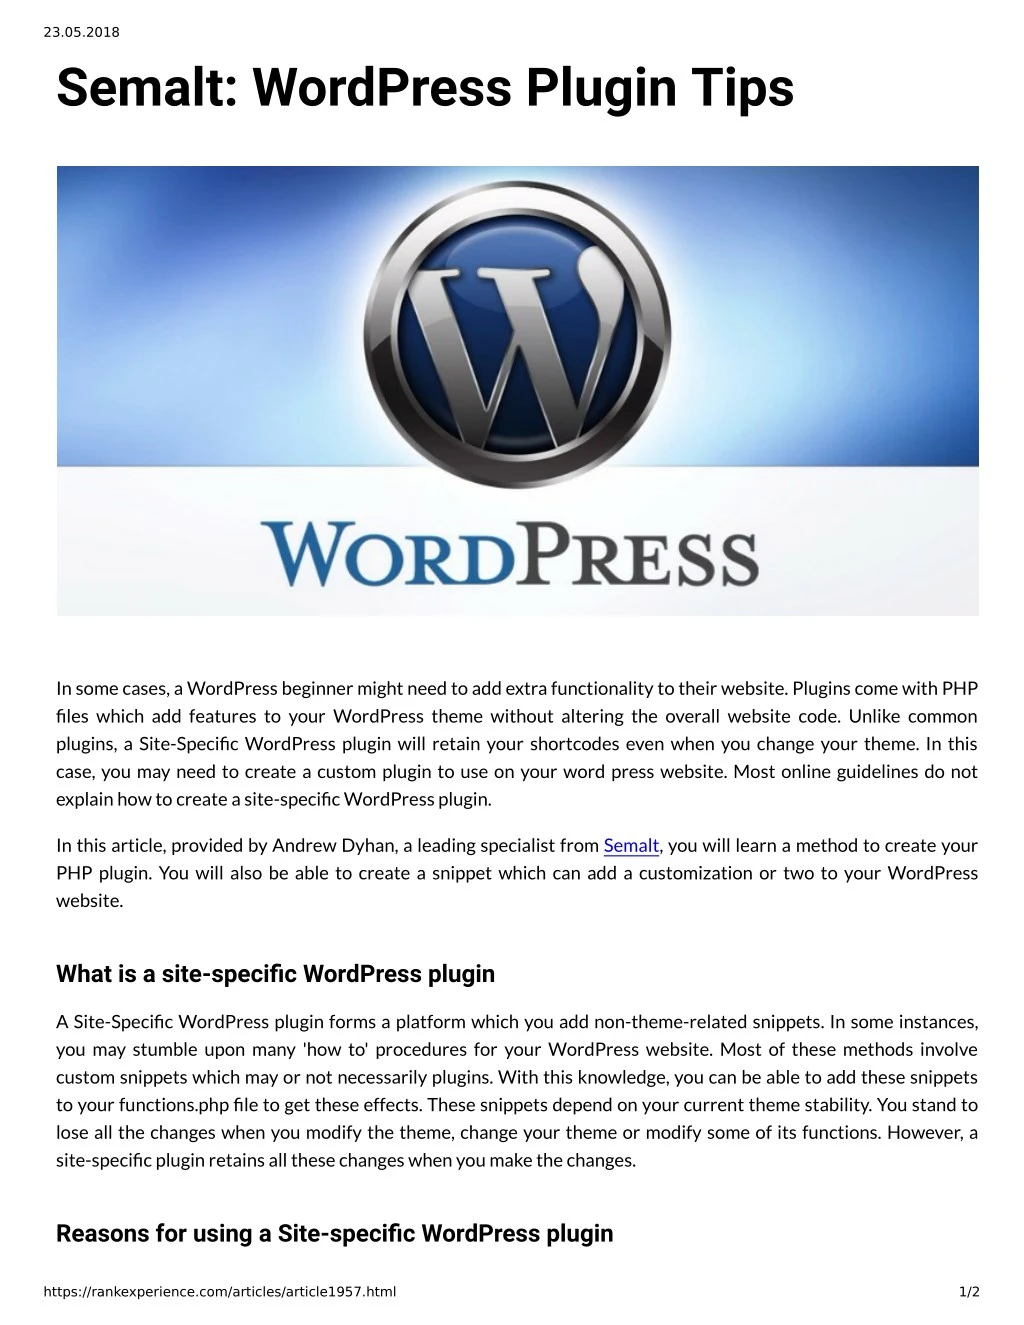 23 05 2018 semalt wordpress plugin tips